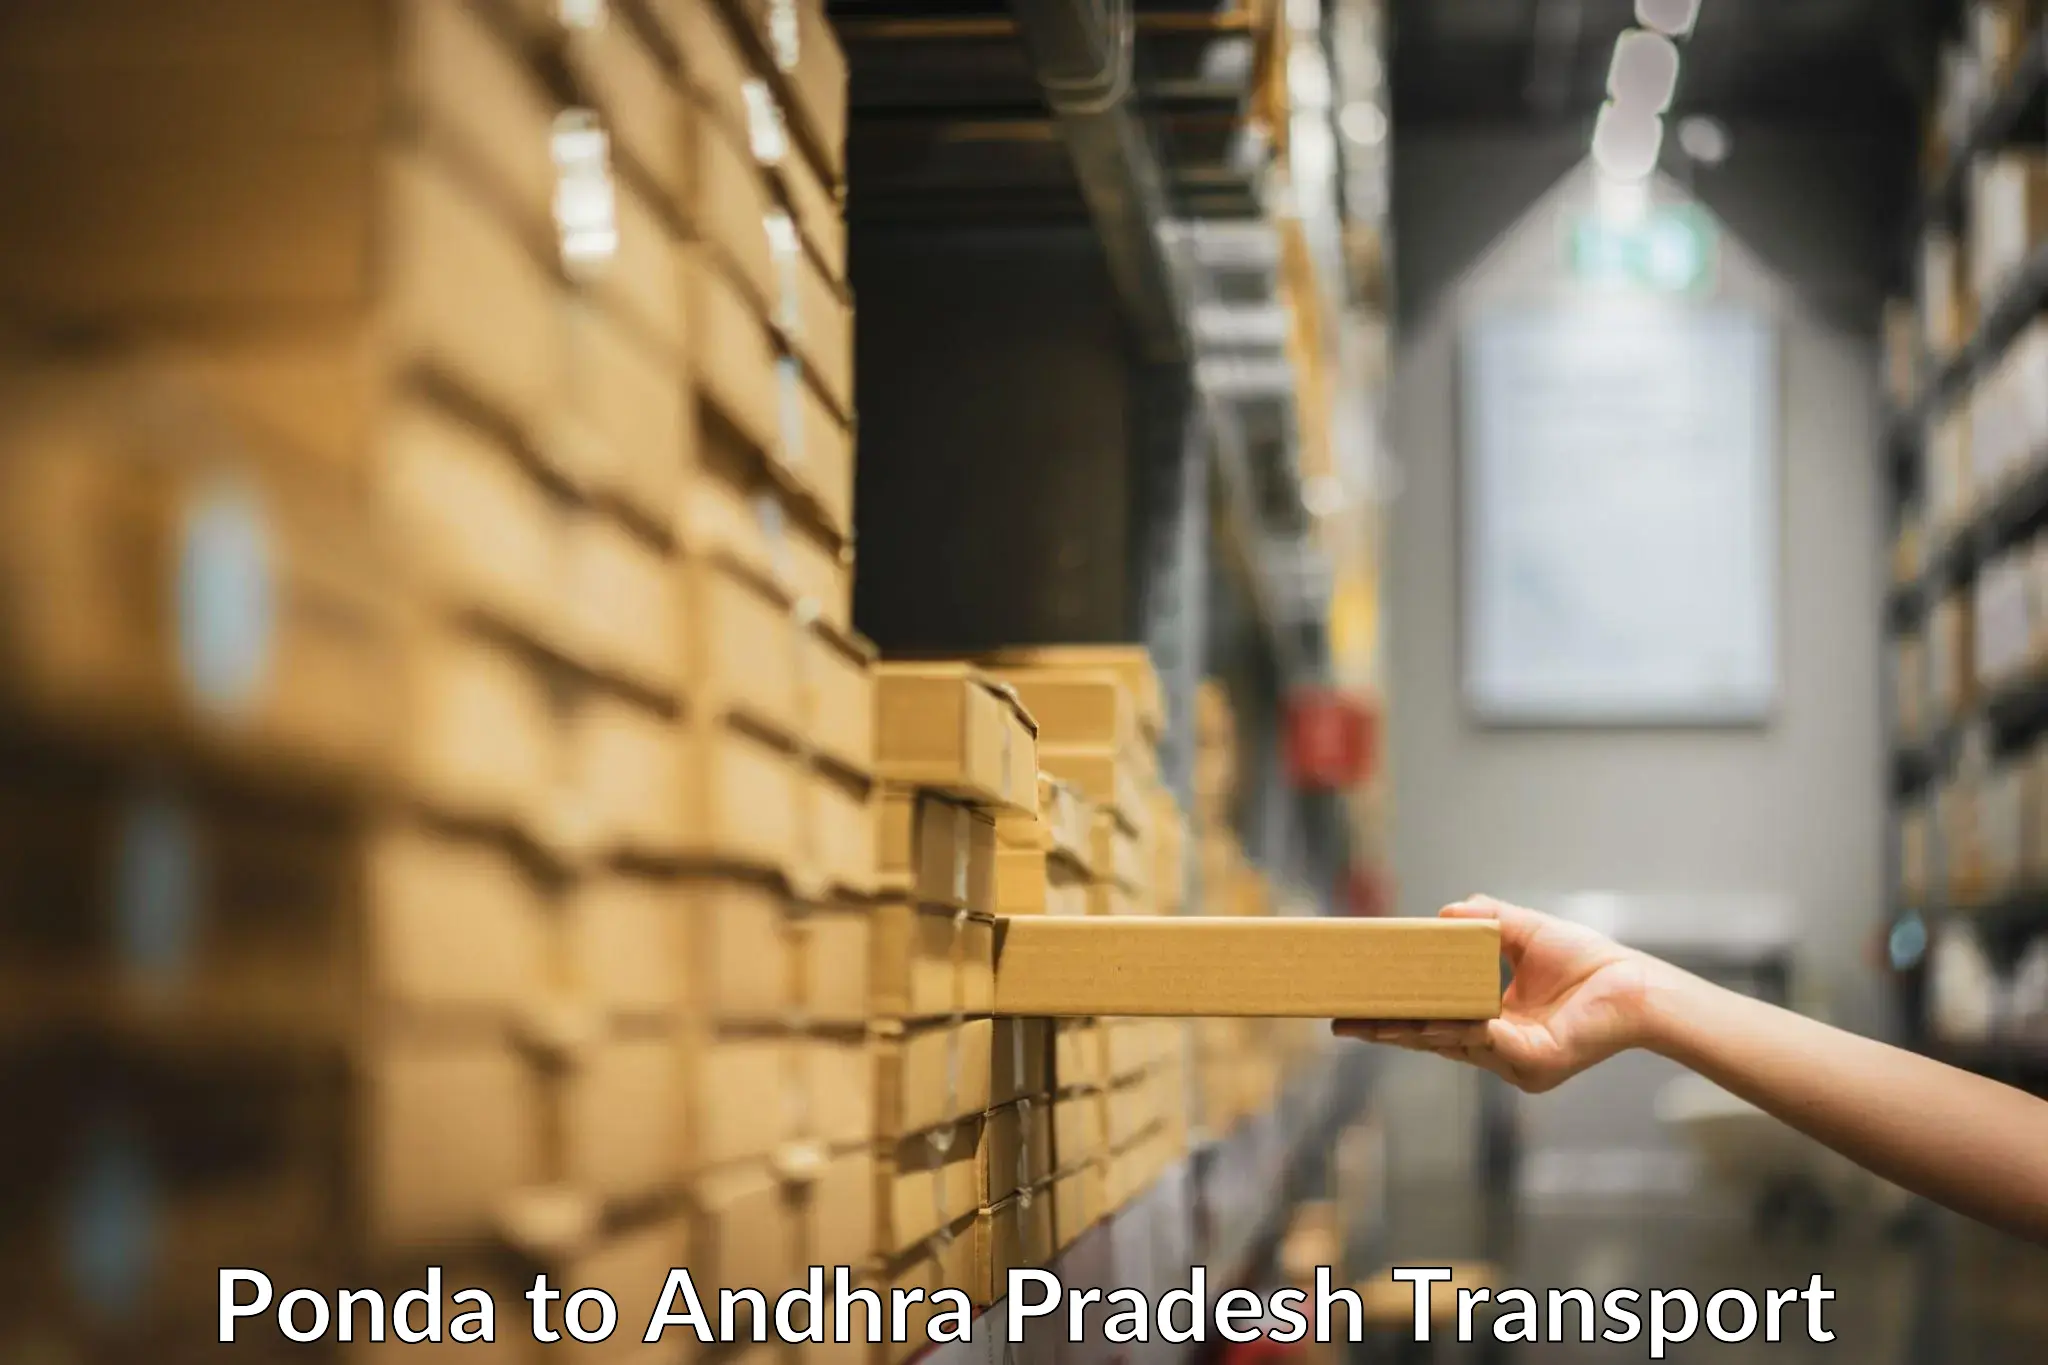 Furniture transport service Ponda to Gudivada